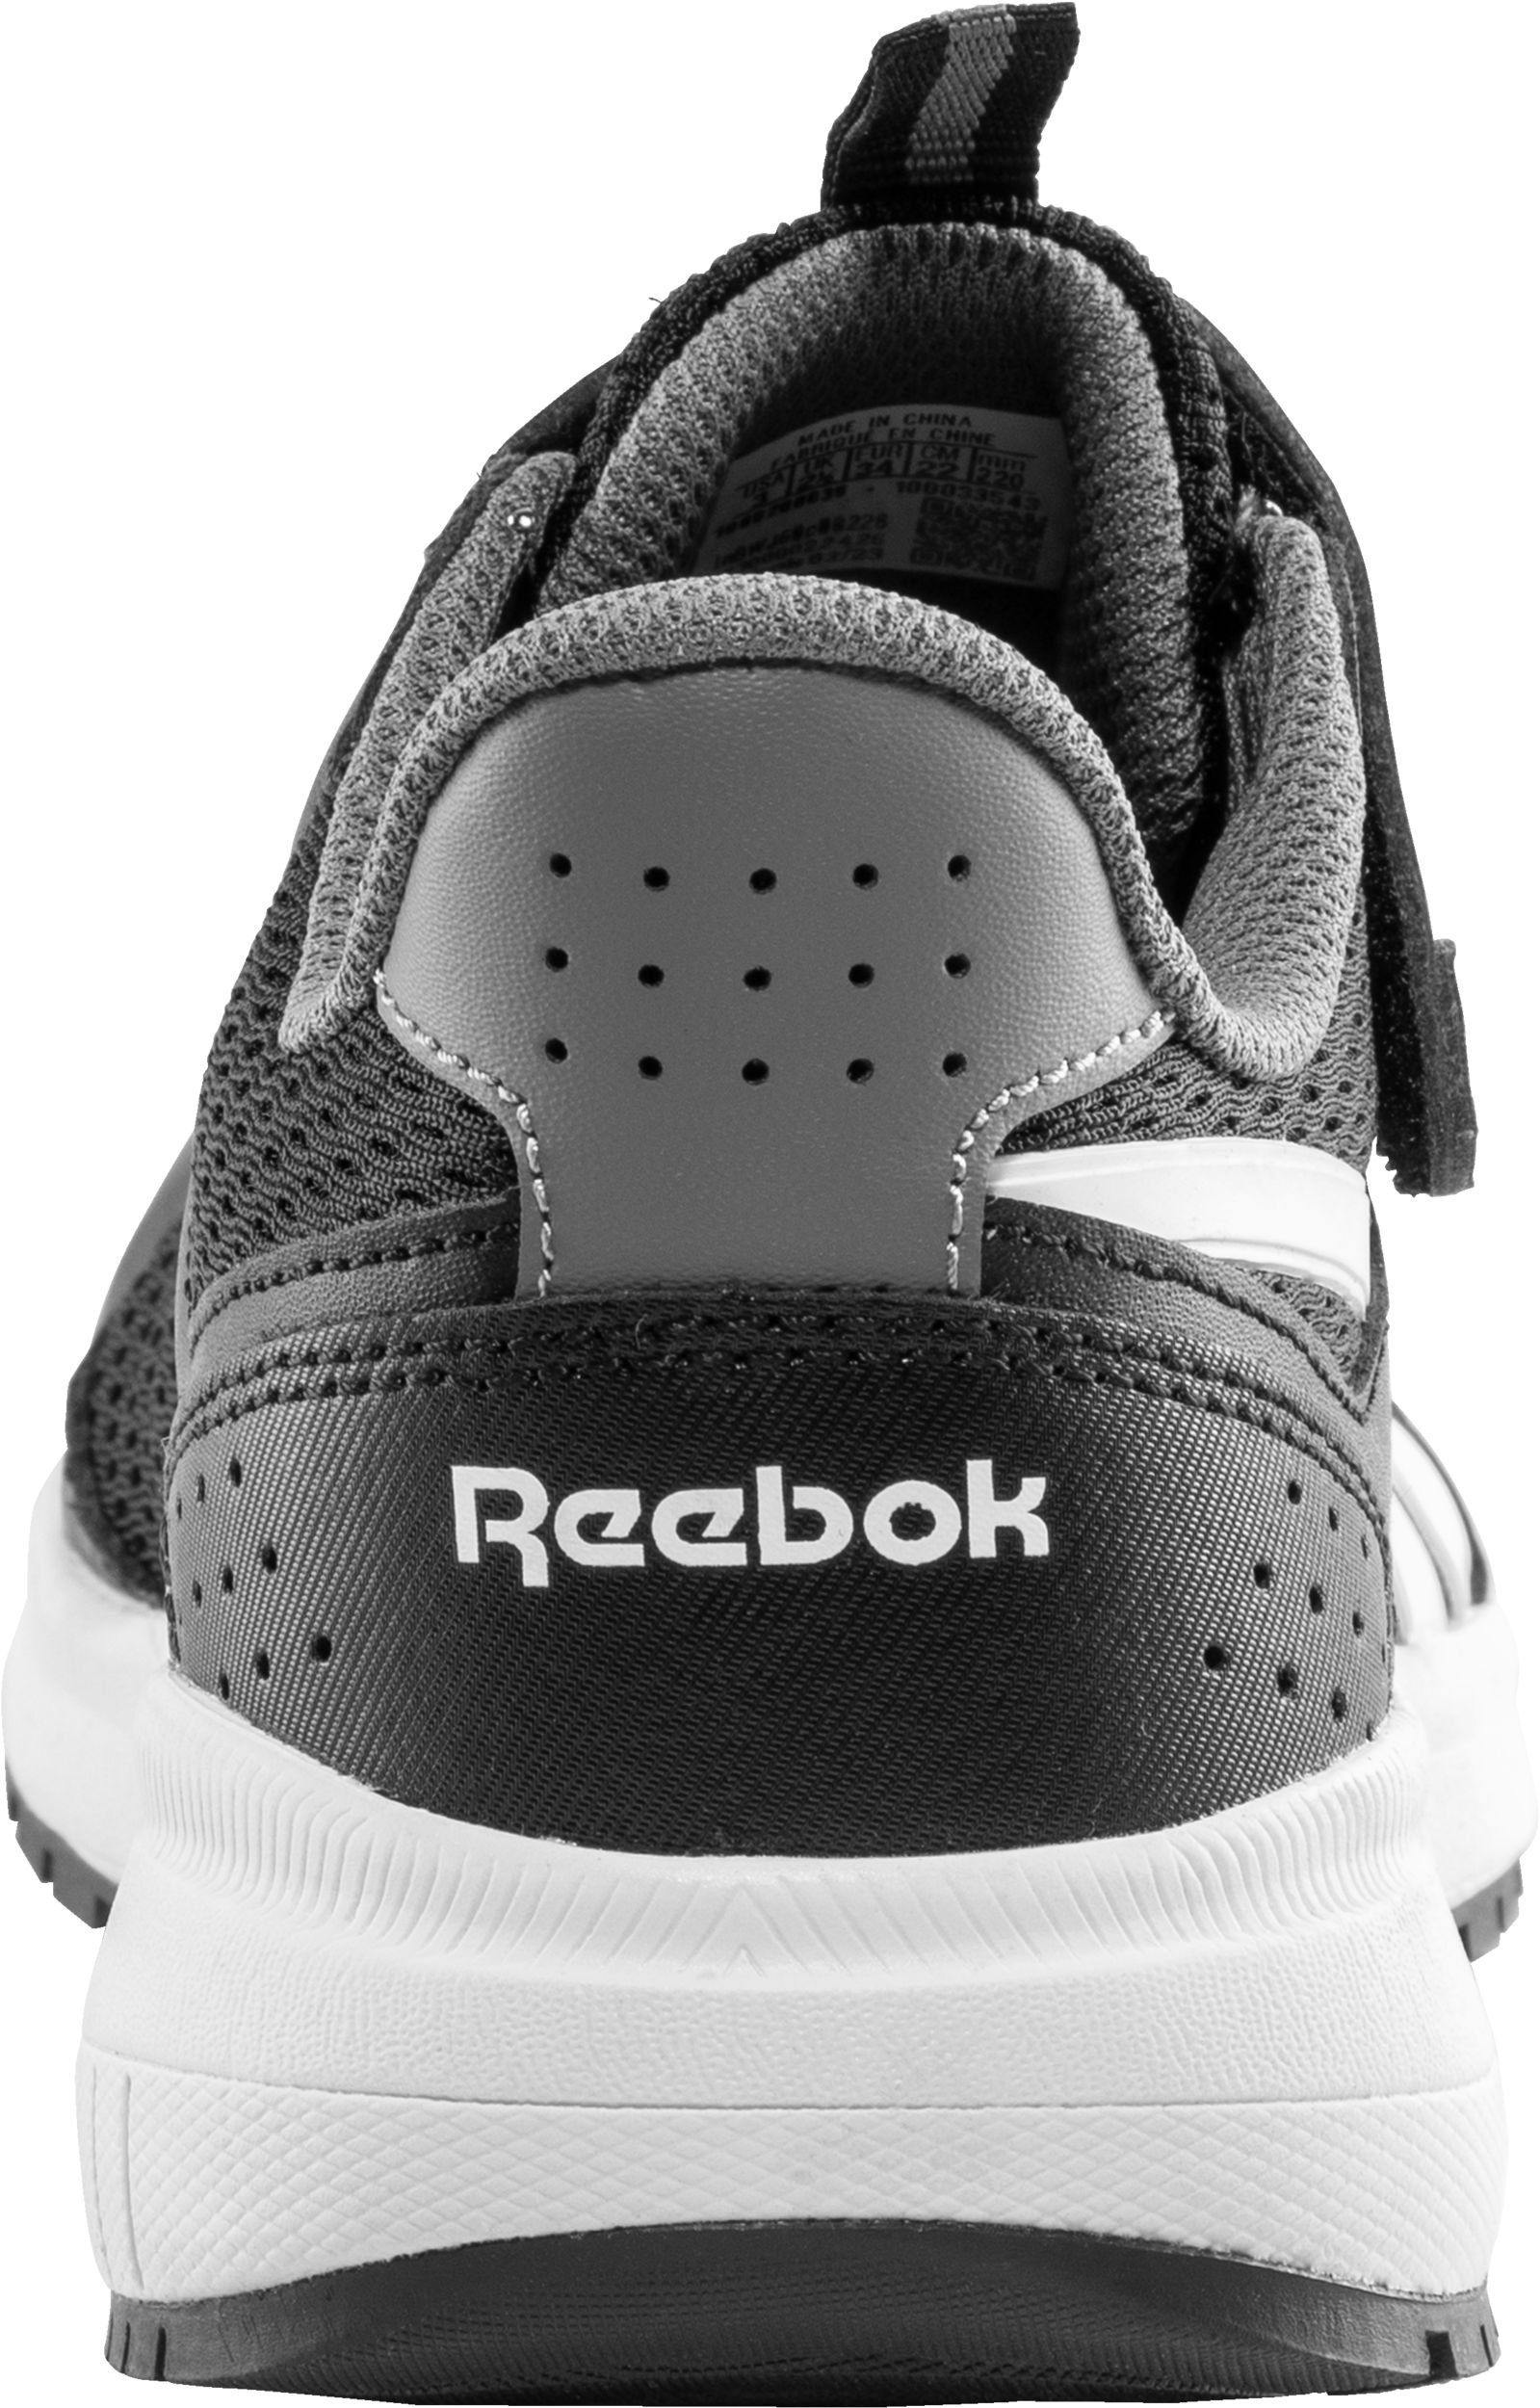 Reebok Road Supreme 4 Shoes - Preschool